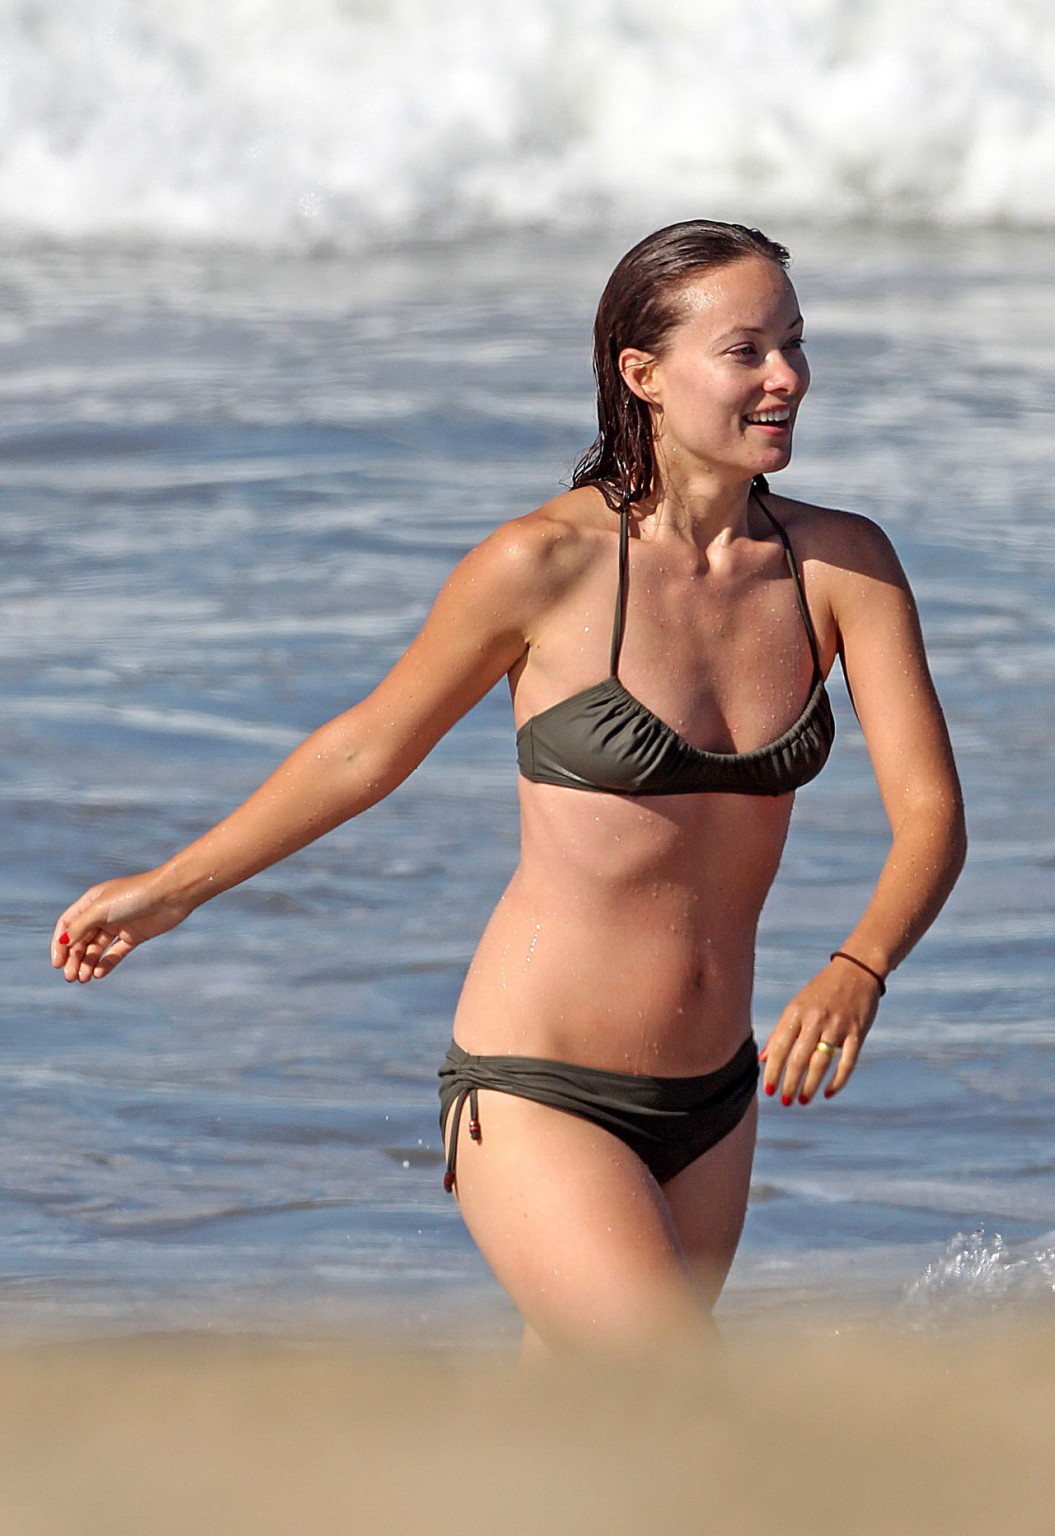 Olivia Wilde se ve muy sexy en bikini mojado en la playa
 #75335397